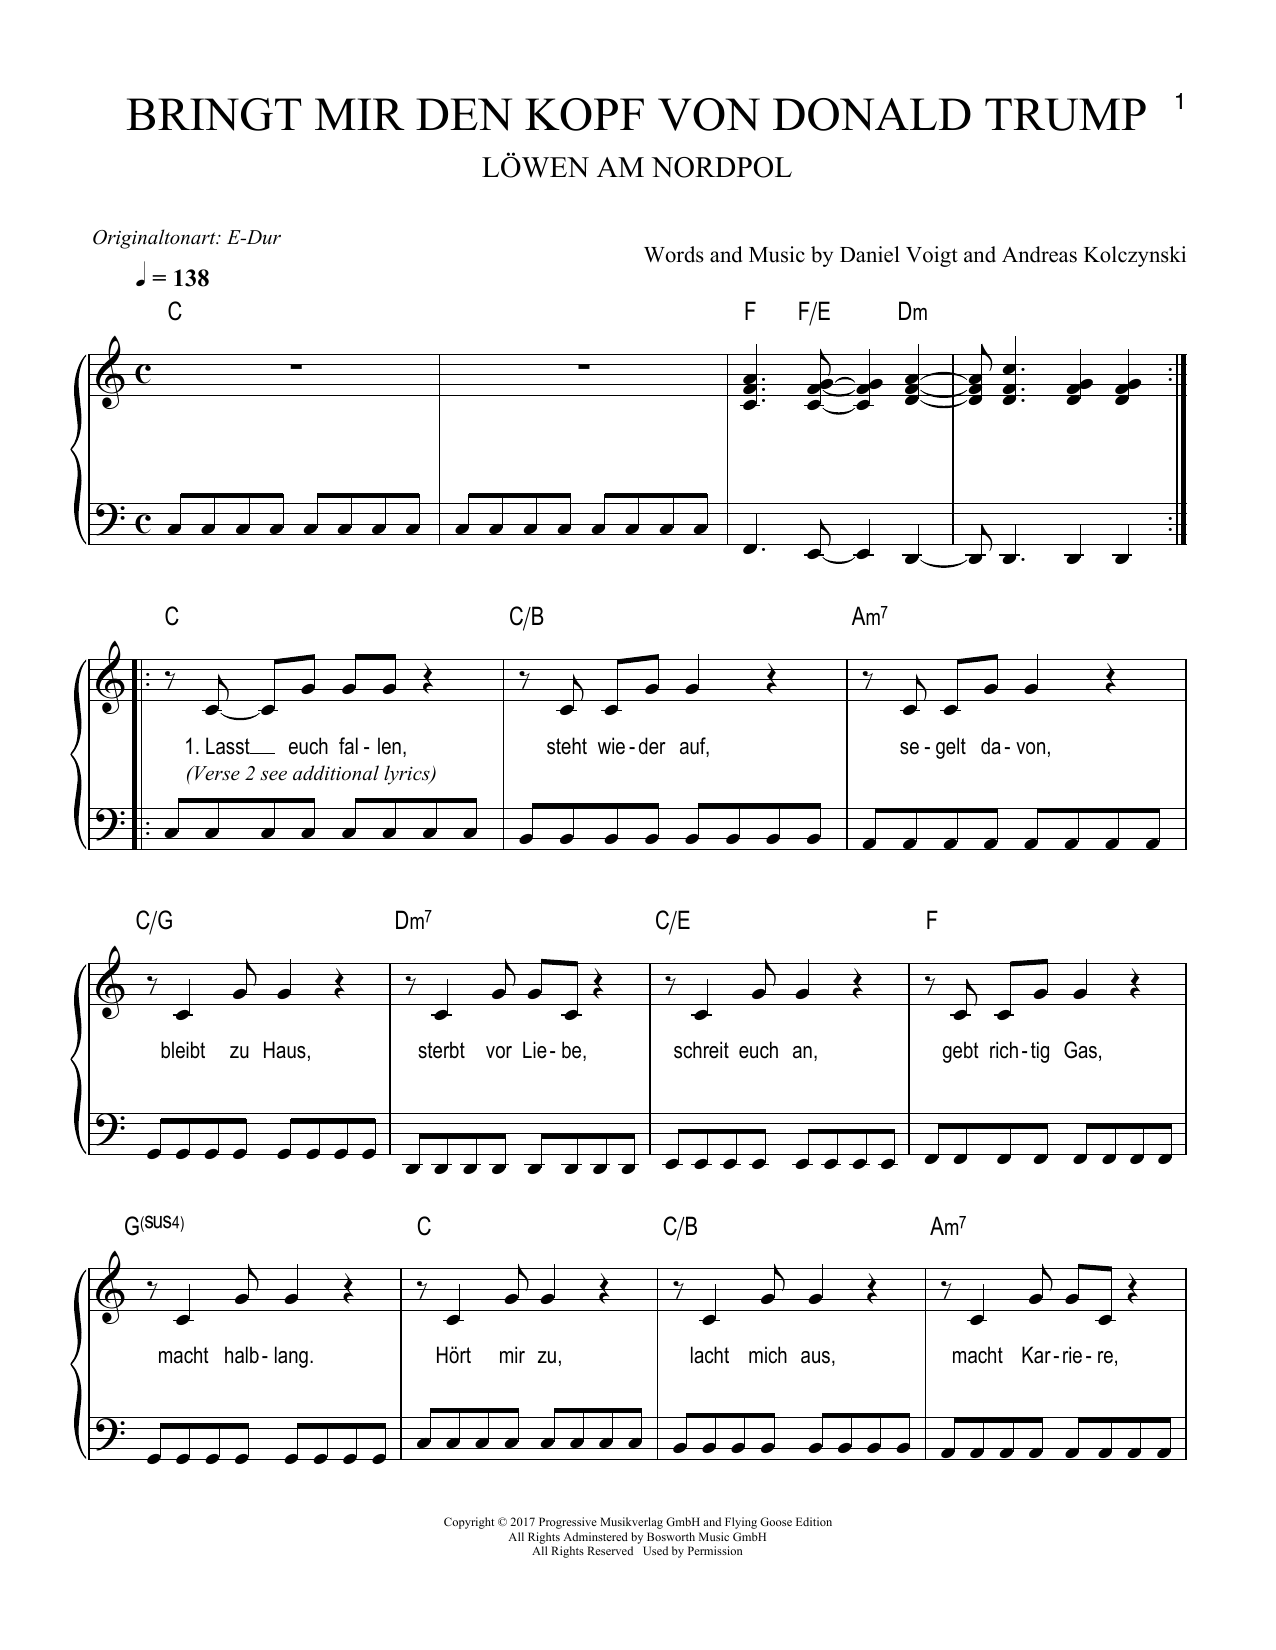 Löwen am Nordpol Bringt mir den Kopf von Donald Trump Sheet Music Notes & Chords for Easy Piano - Download or Print PDF